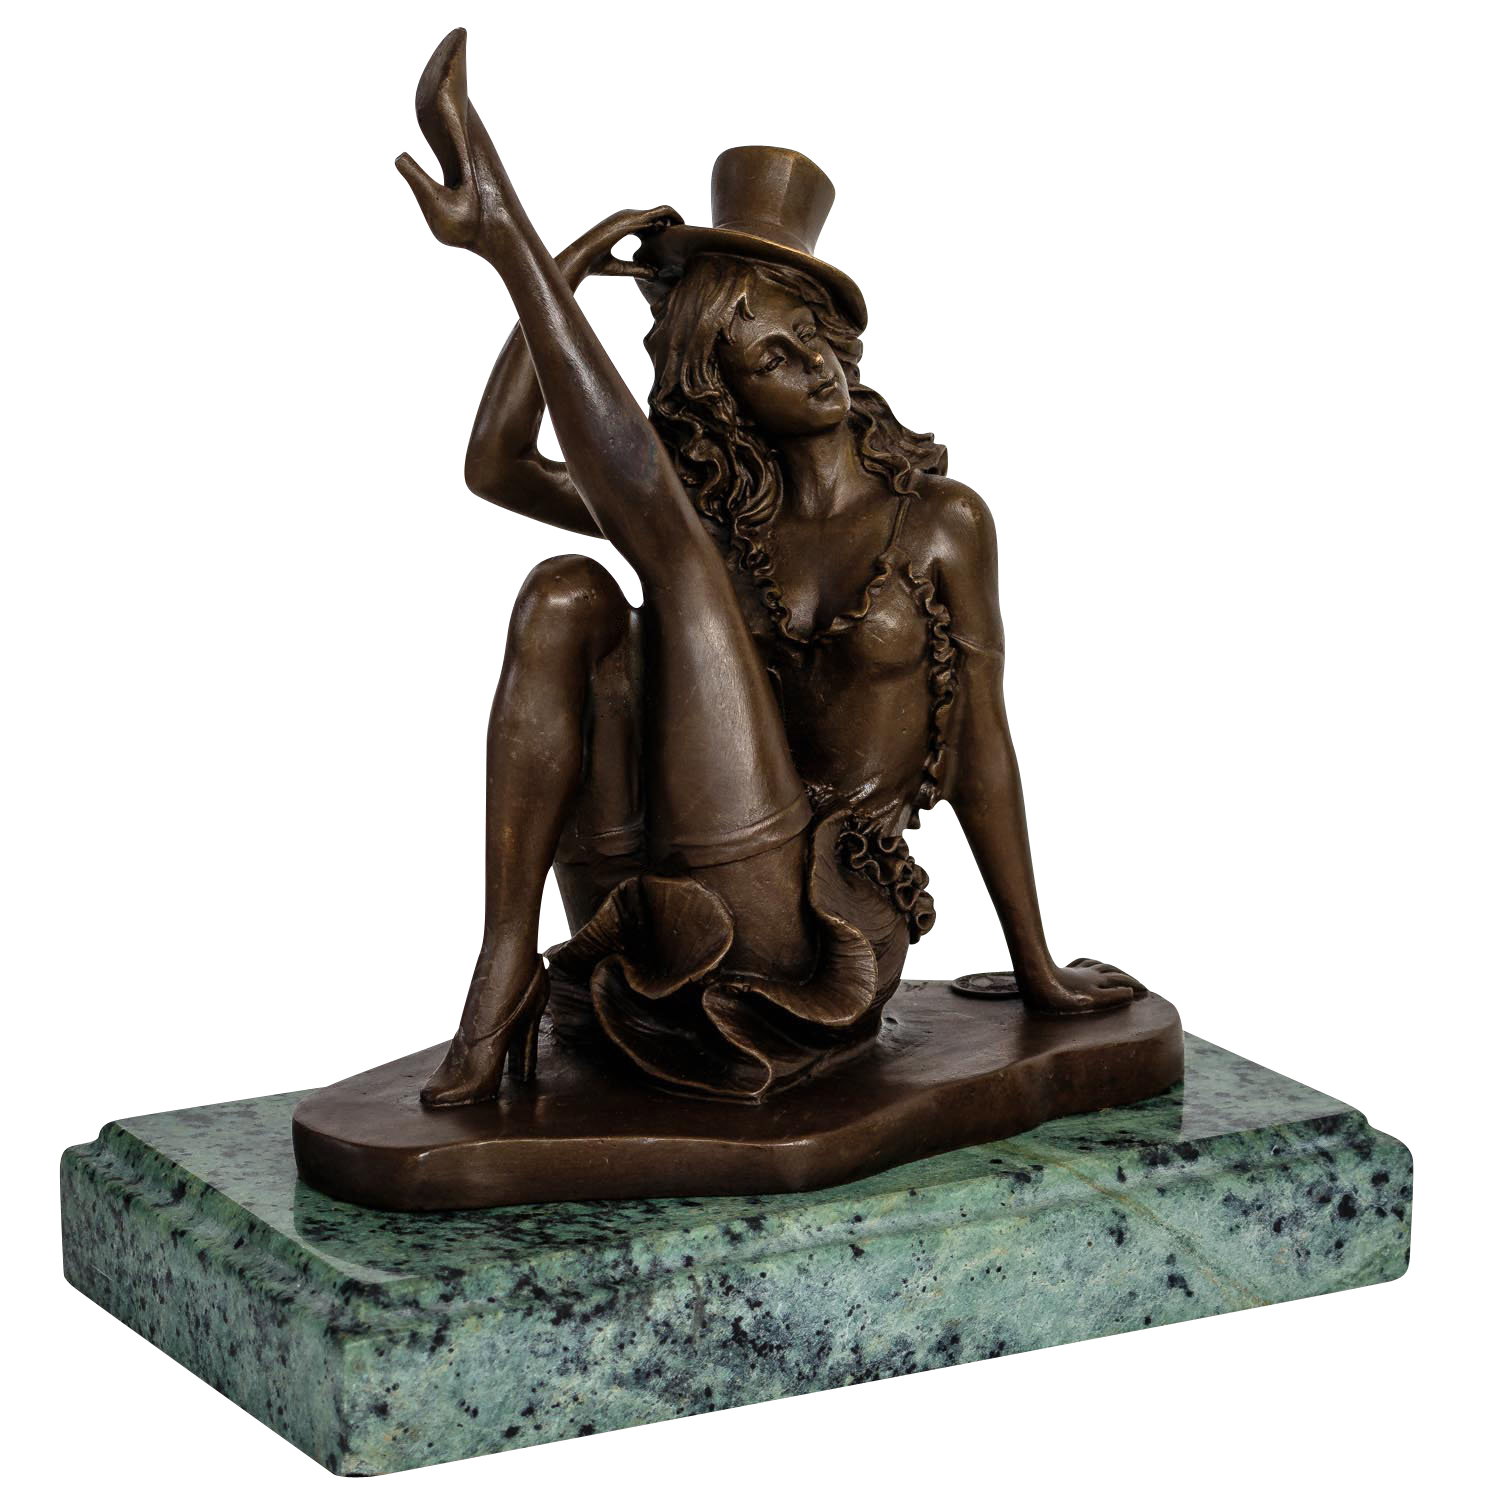 Escultura de bronce Revue bailarina en Antik-estilo bronce personaje estatua 19cm 